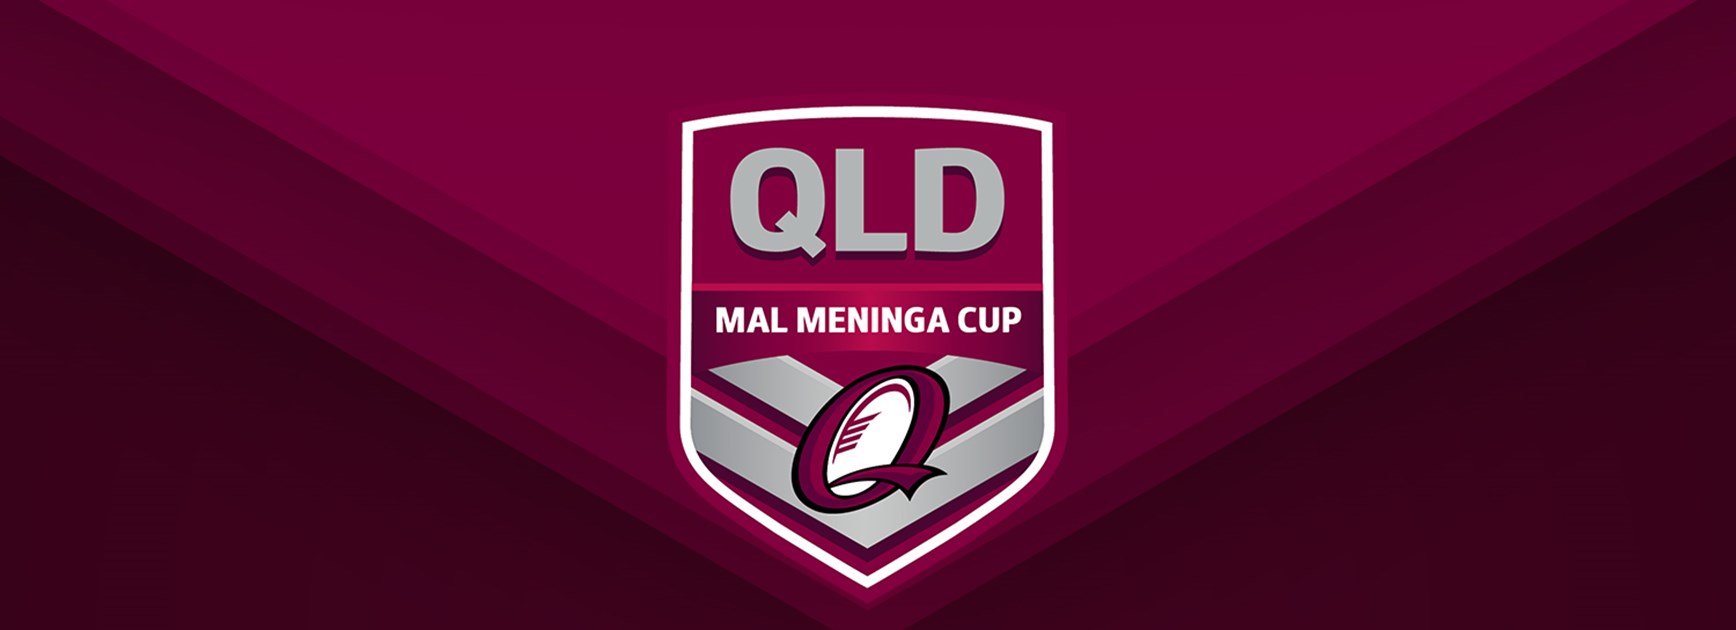 Mal Meninga Cup draw 2018